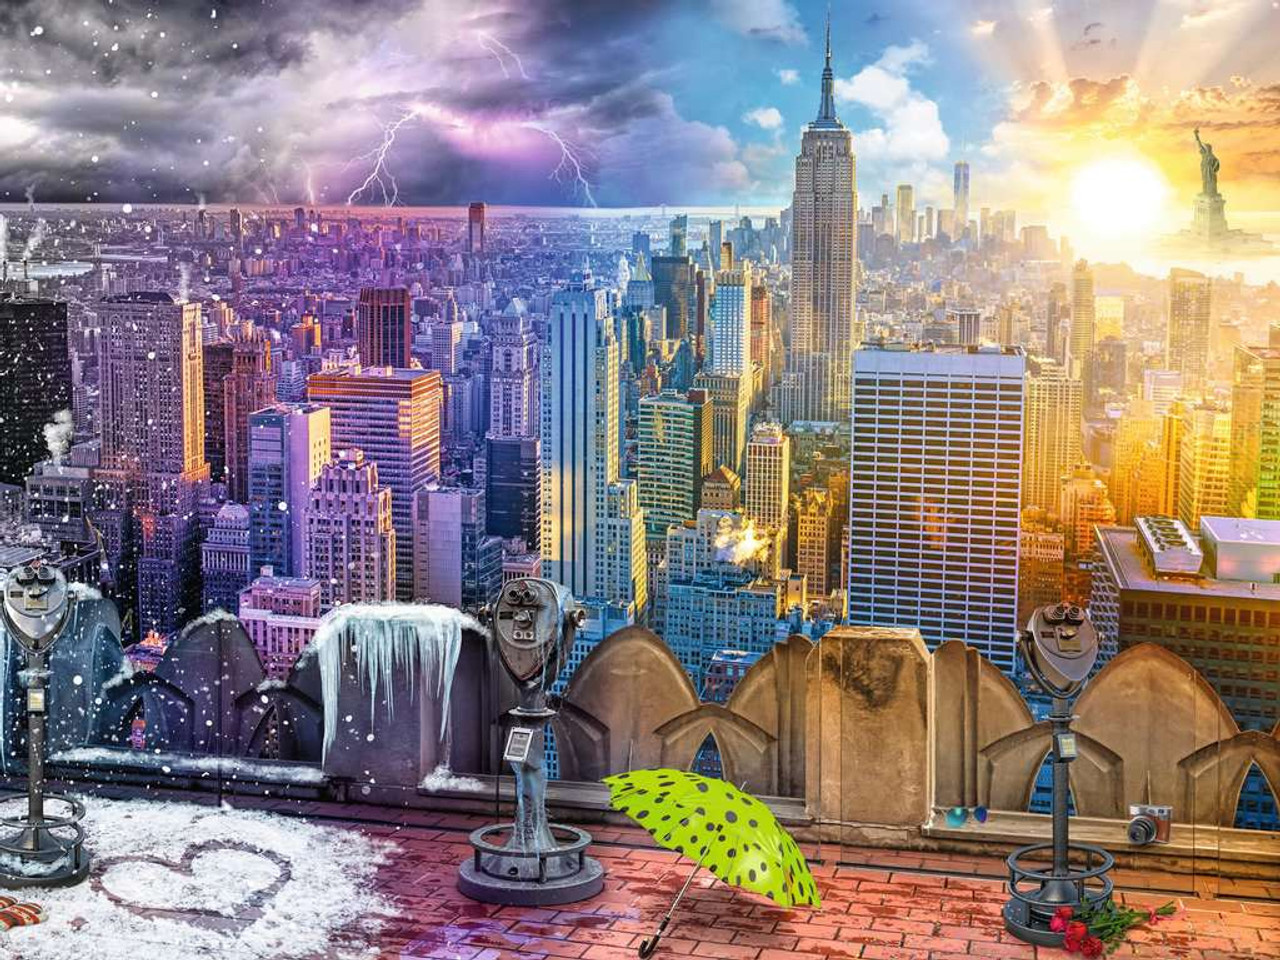 Day & Night NYC Skyline Landmarks & Monuments Jigsaw Puzzle